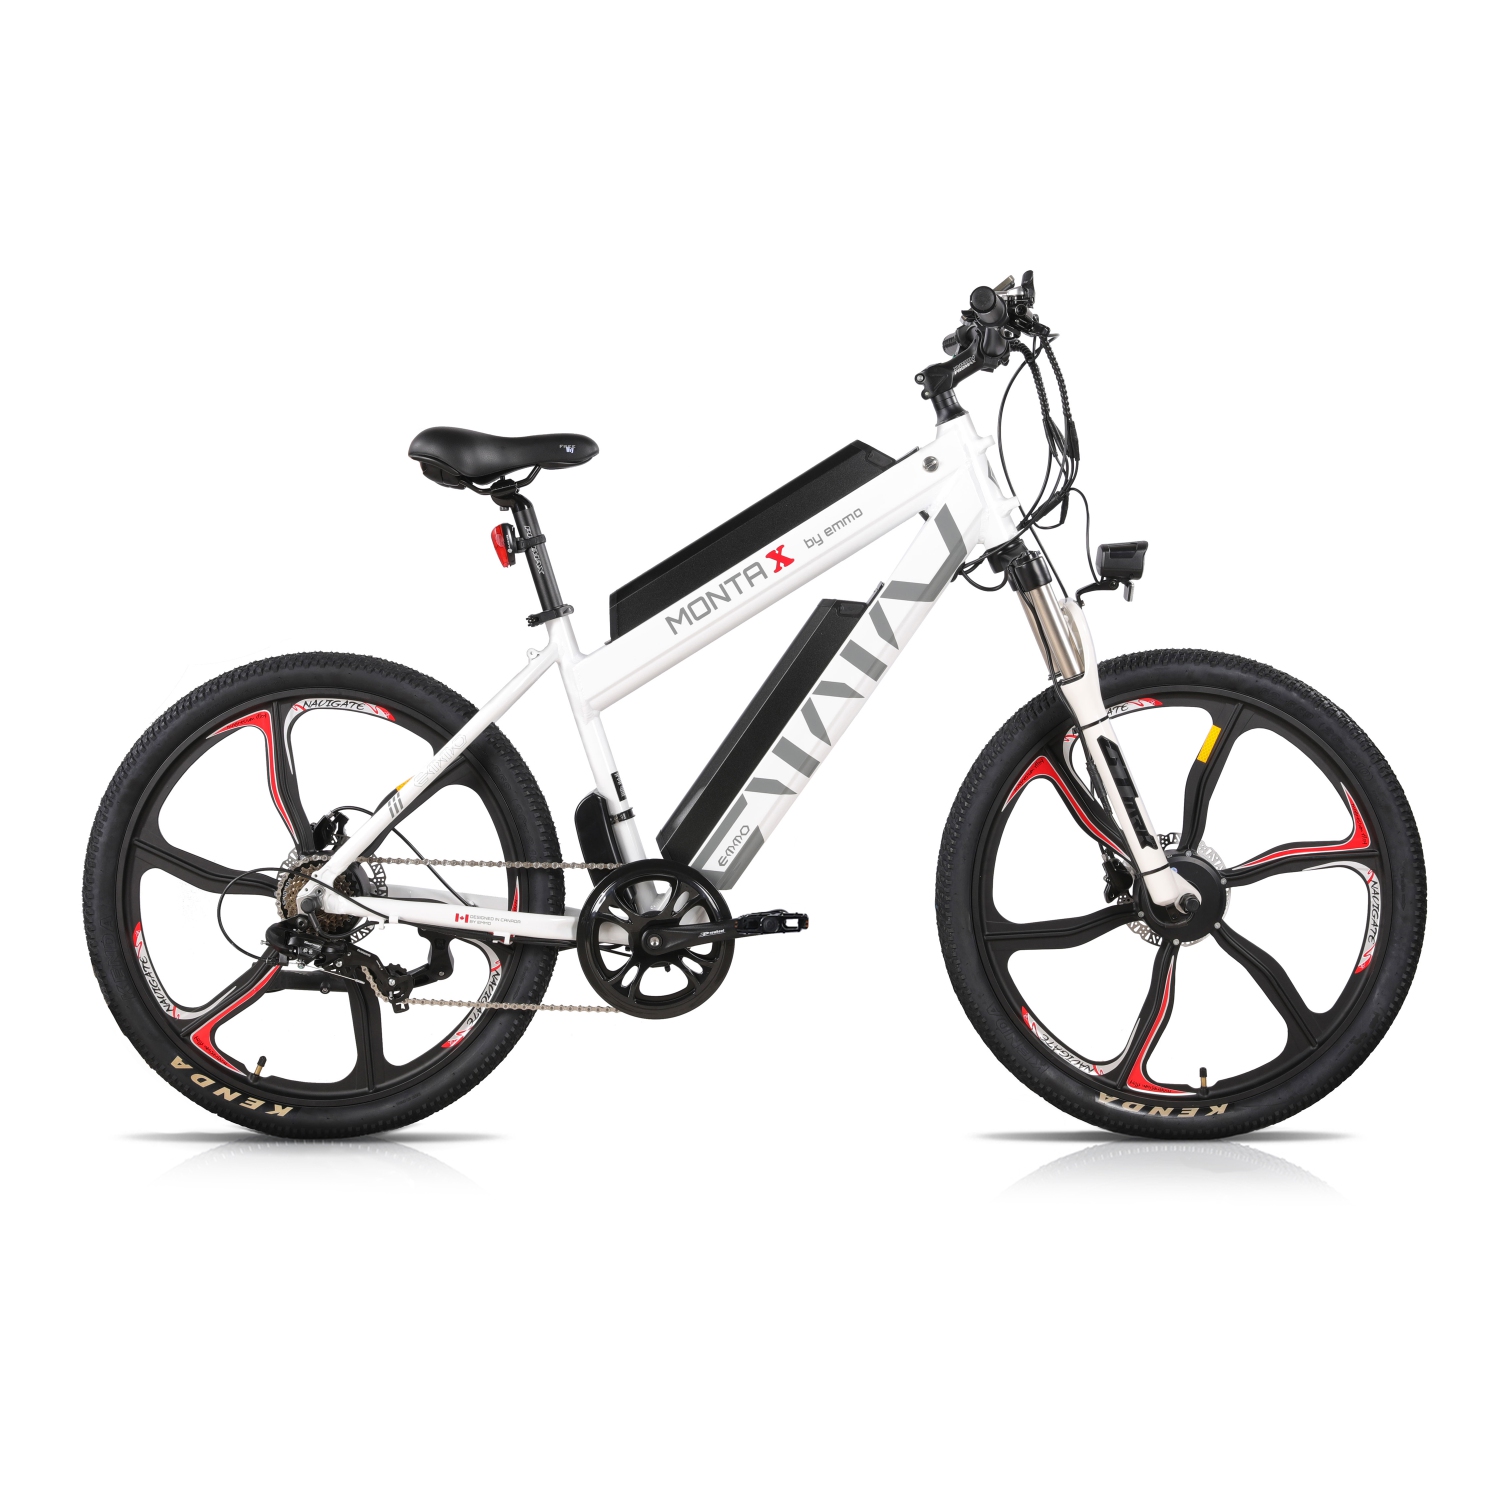 Emmo Dual Motor Single Battery - High-Performance Electric Mountain Bike - 48V/15Ah Removable Li Battery - Monta X White